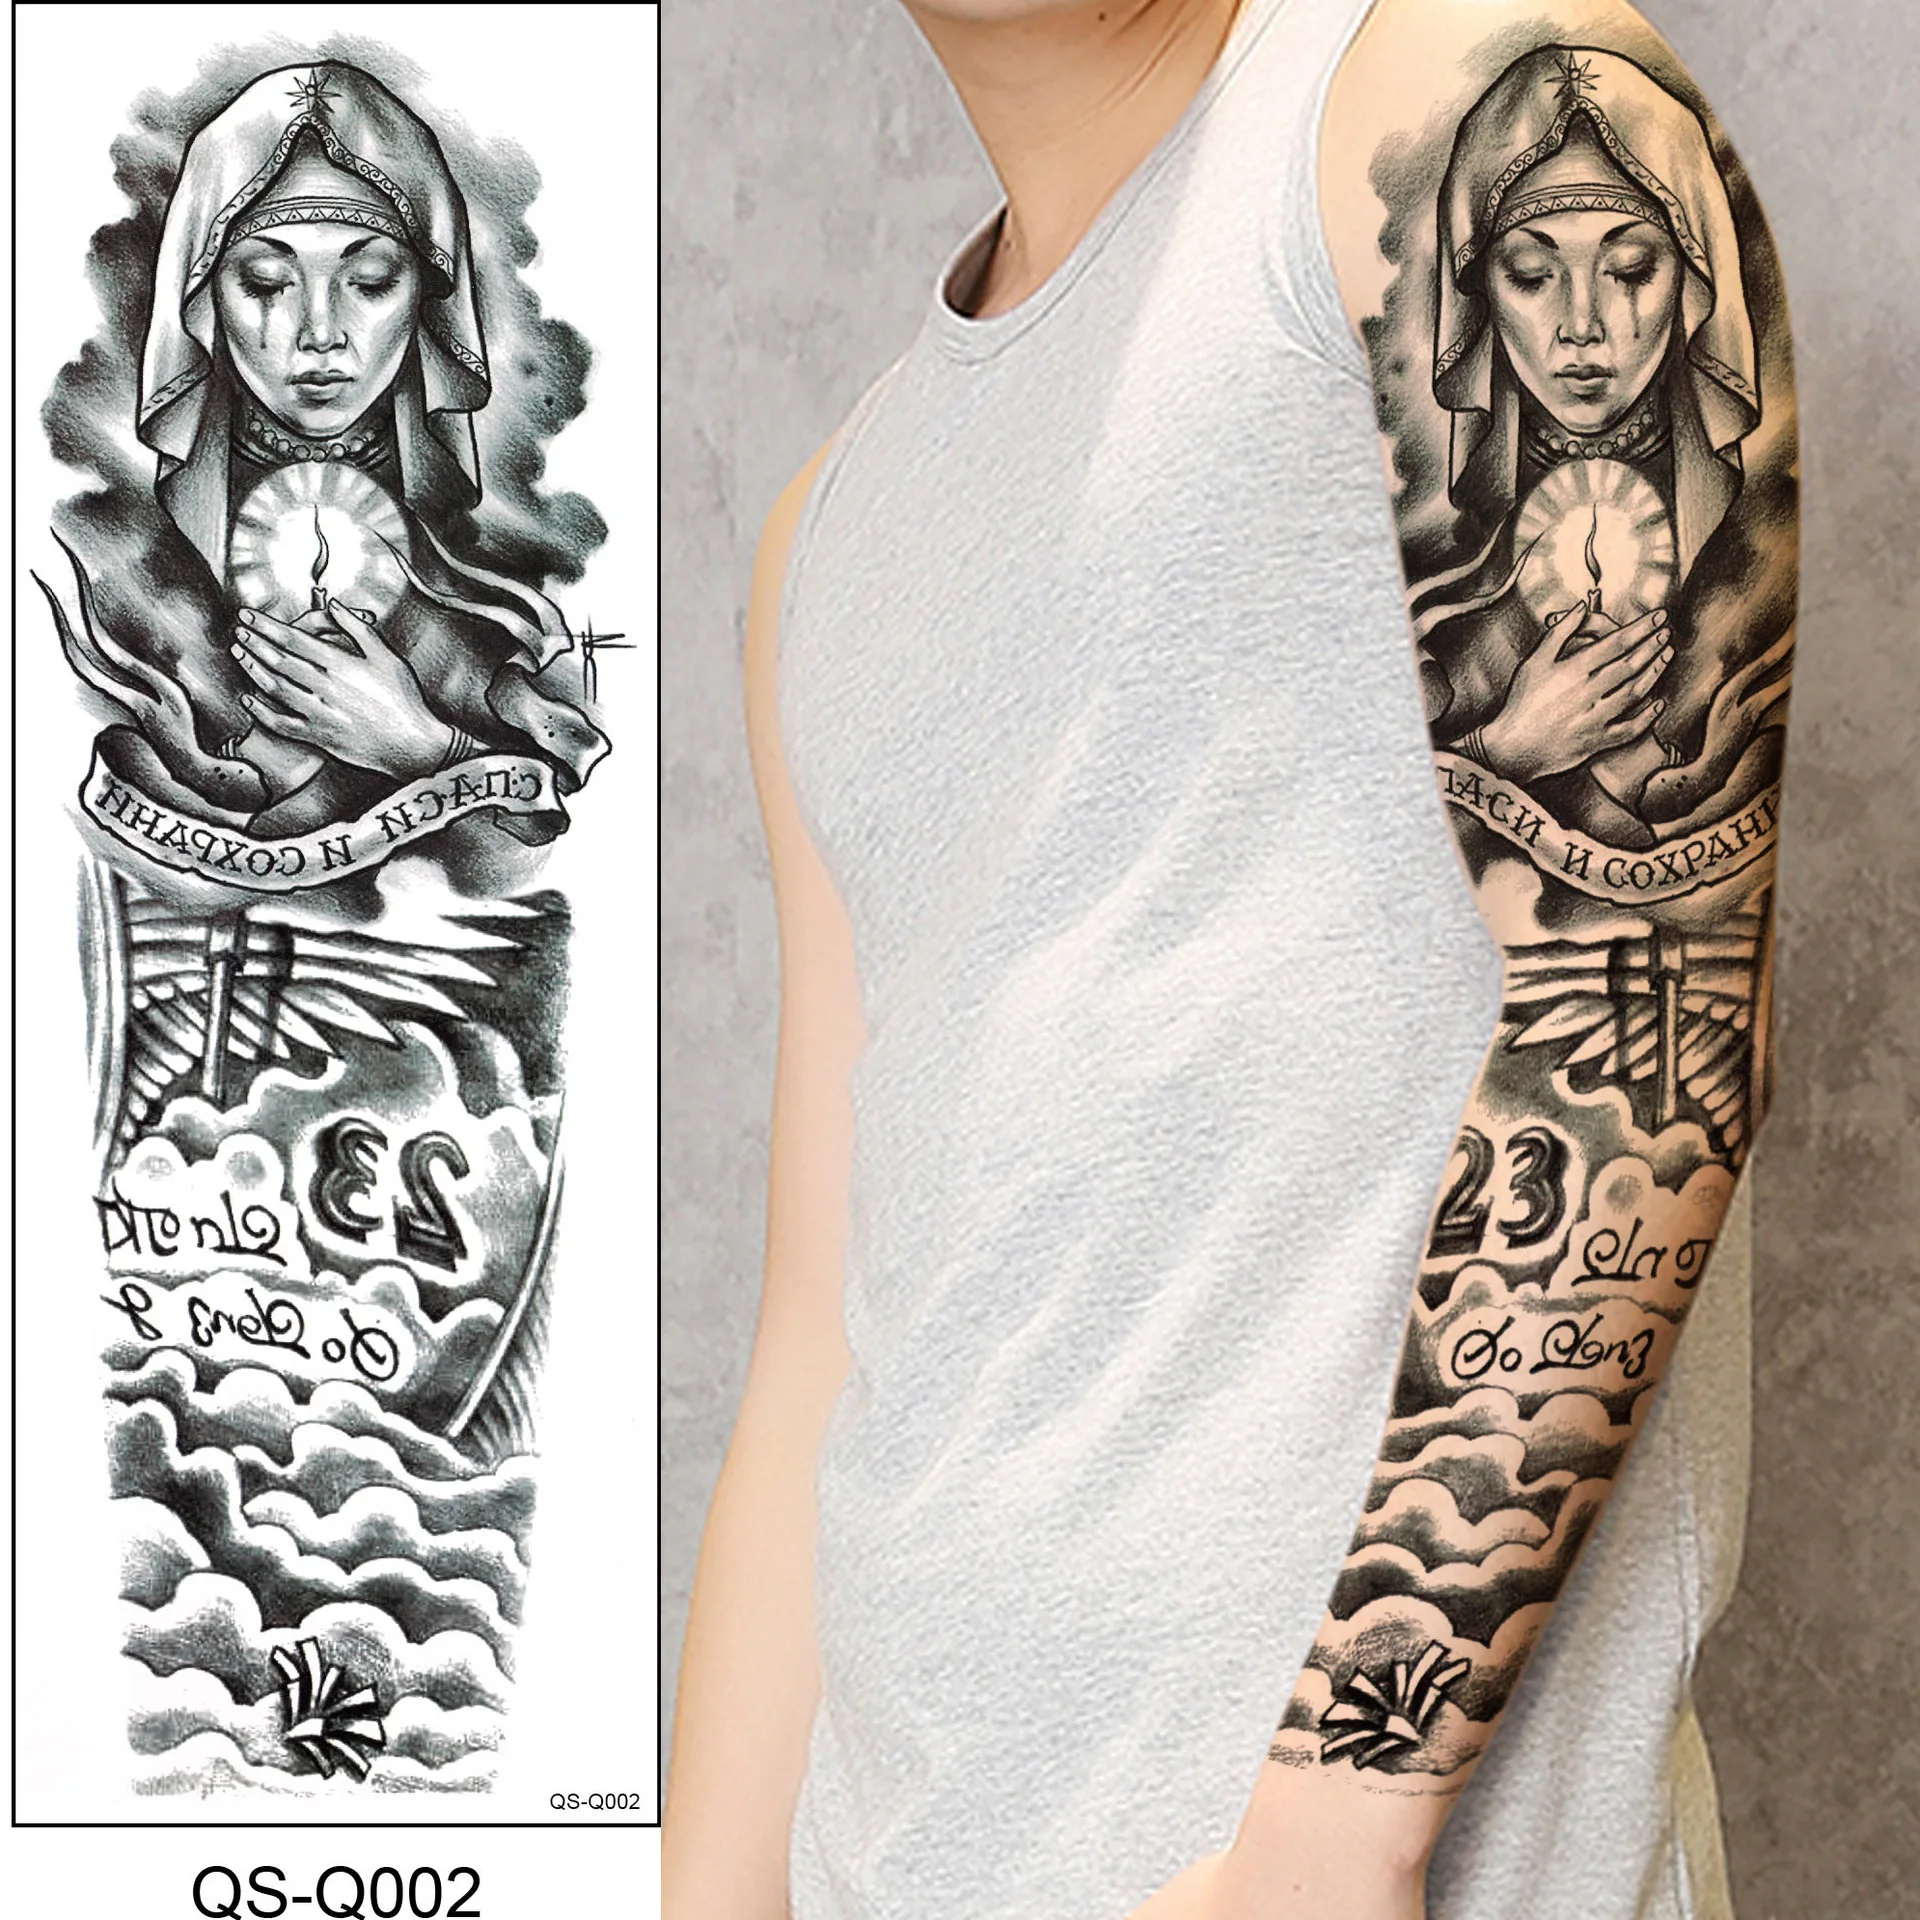 

VRIUA 48cmx17cm Arm Sleeve Tattoo Sketch Angel Waterproof Temporary Crying Woman Tattoo Sticker Wild Men Full Bird Totem Tattoo, Colorful